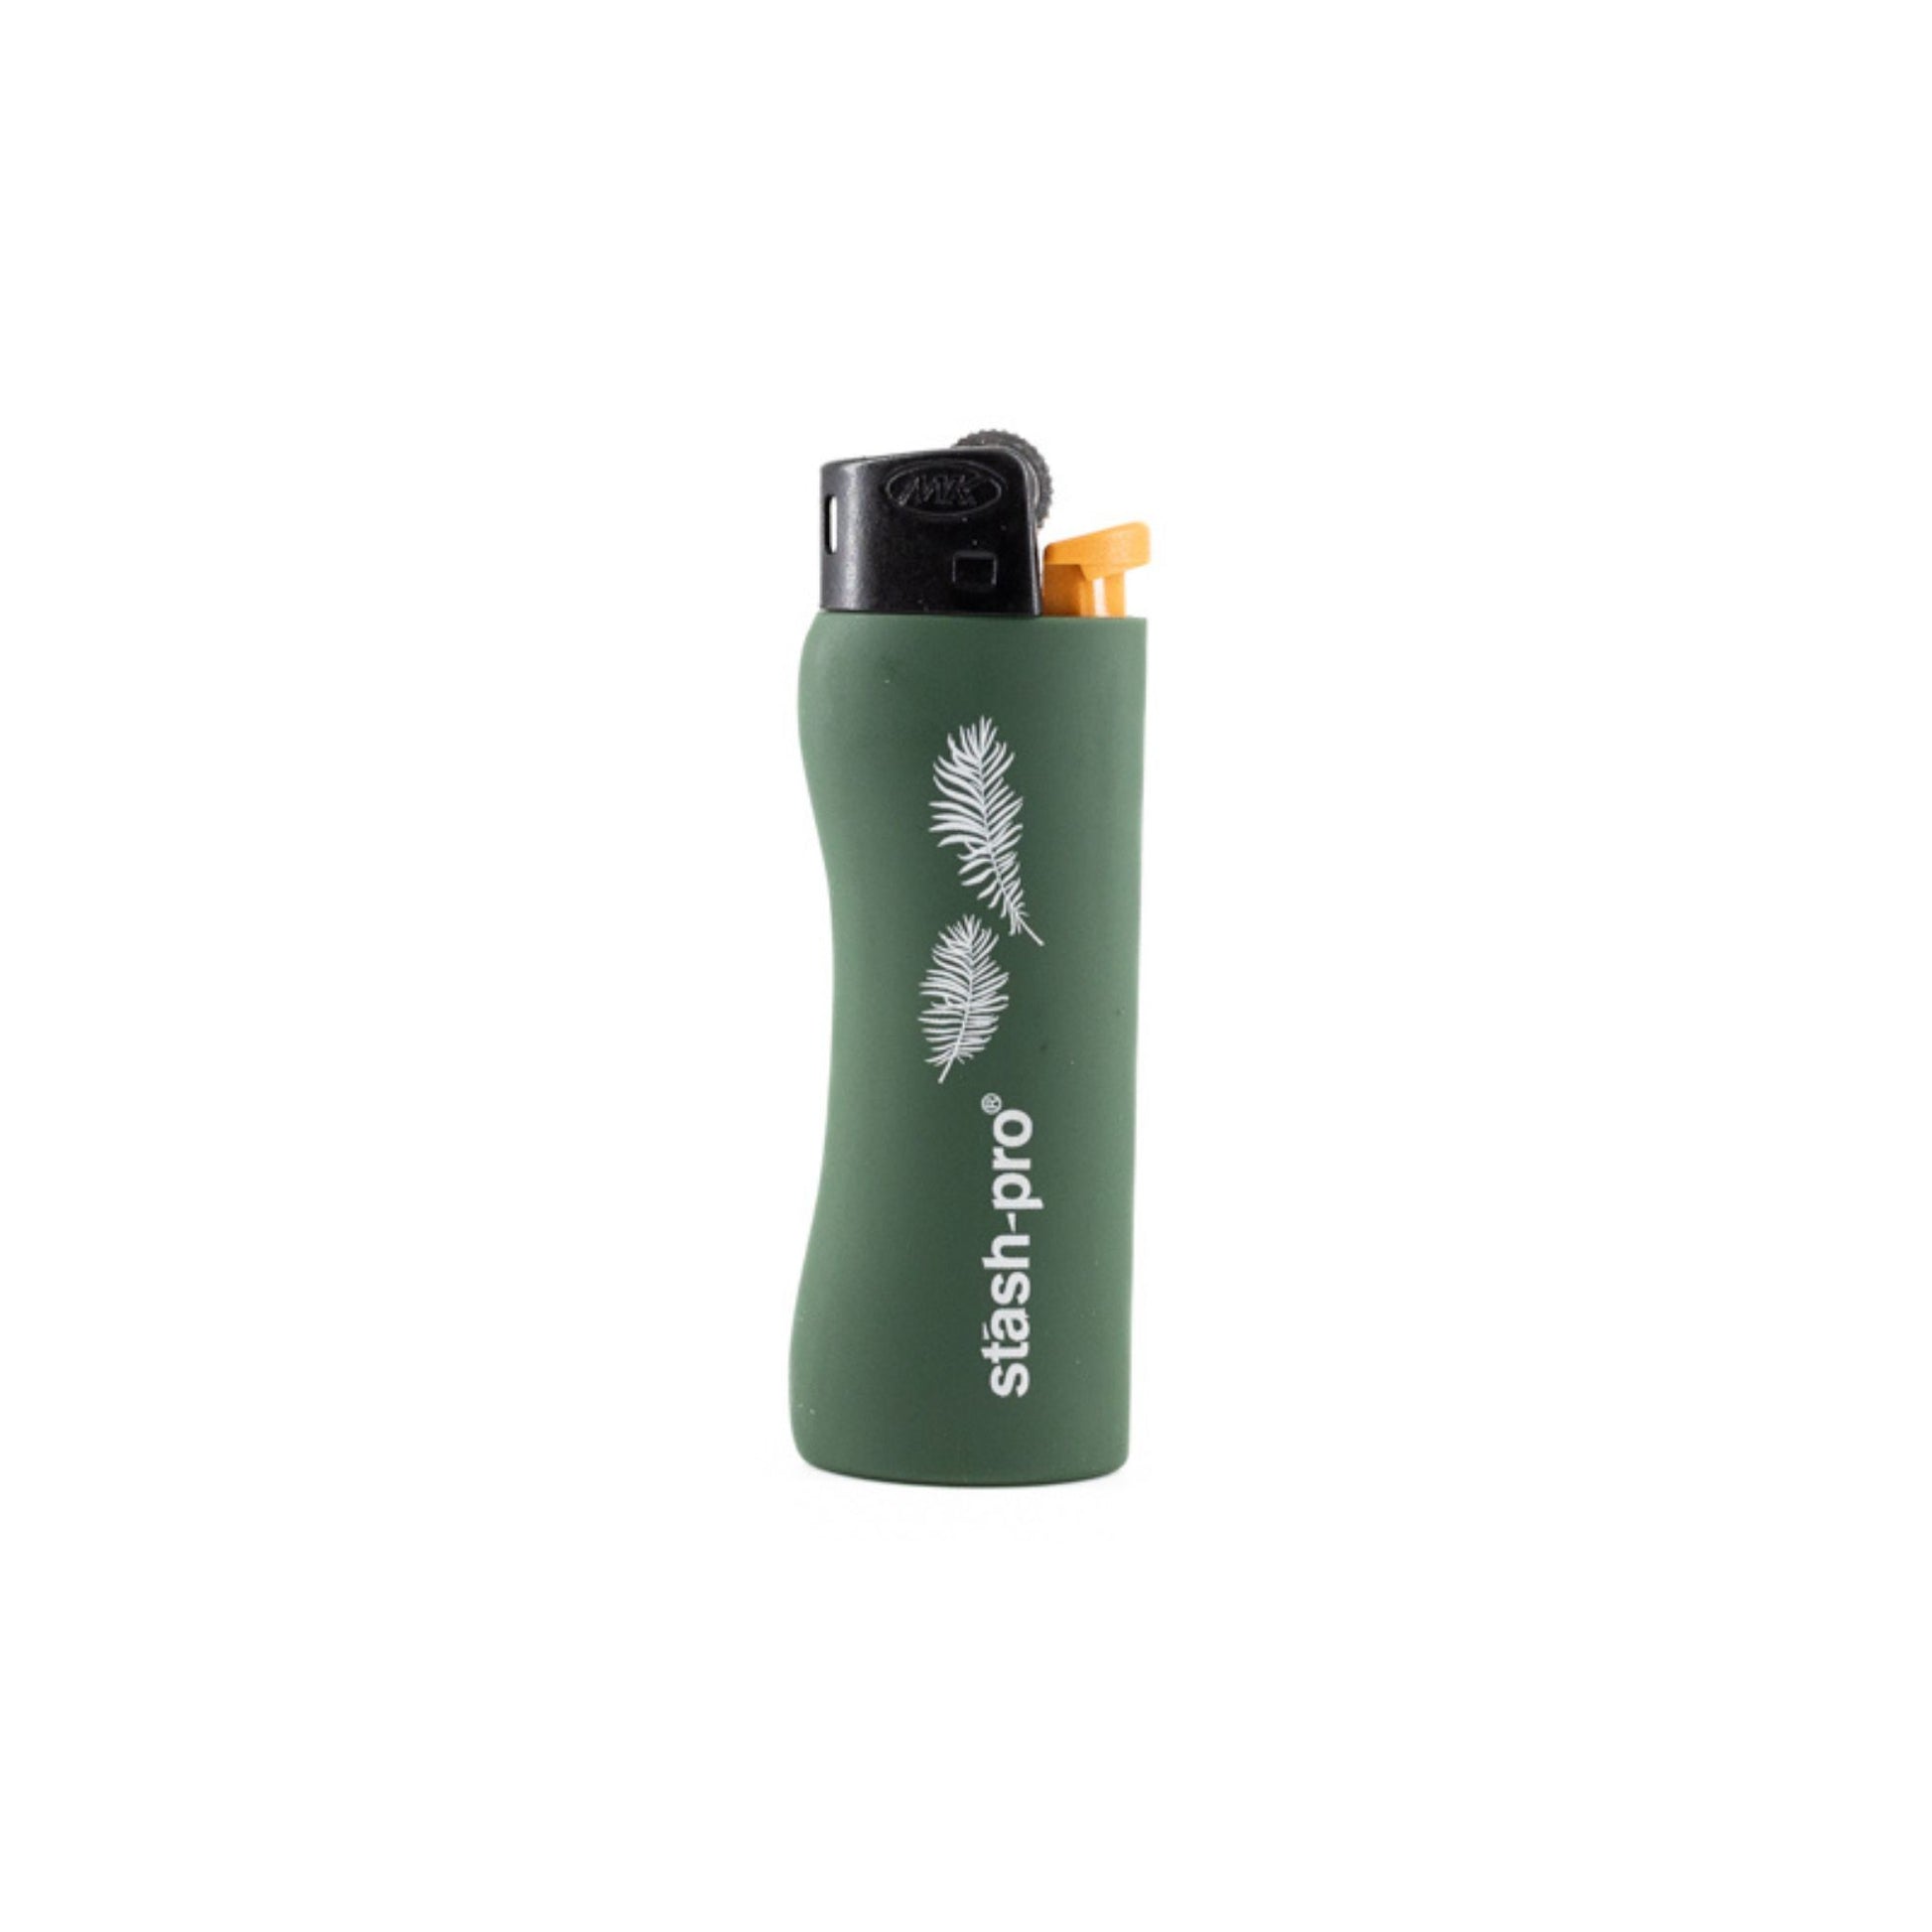 Stash-Pro Pocket Lighter - ZY5GS1